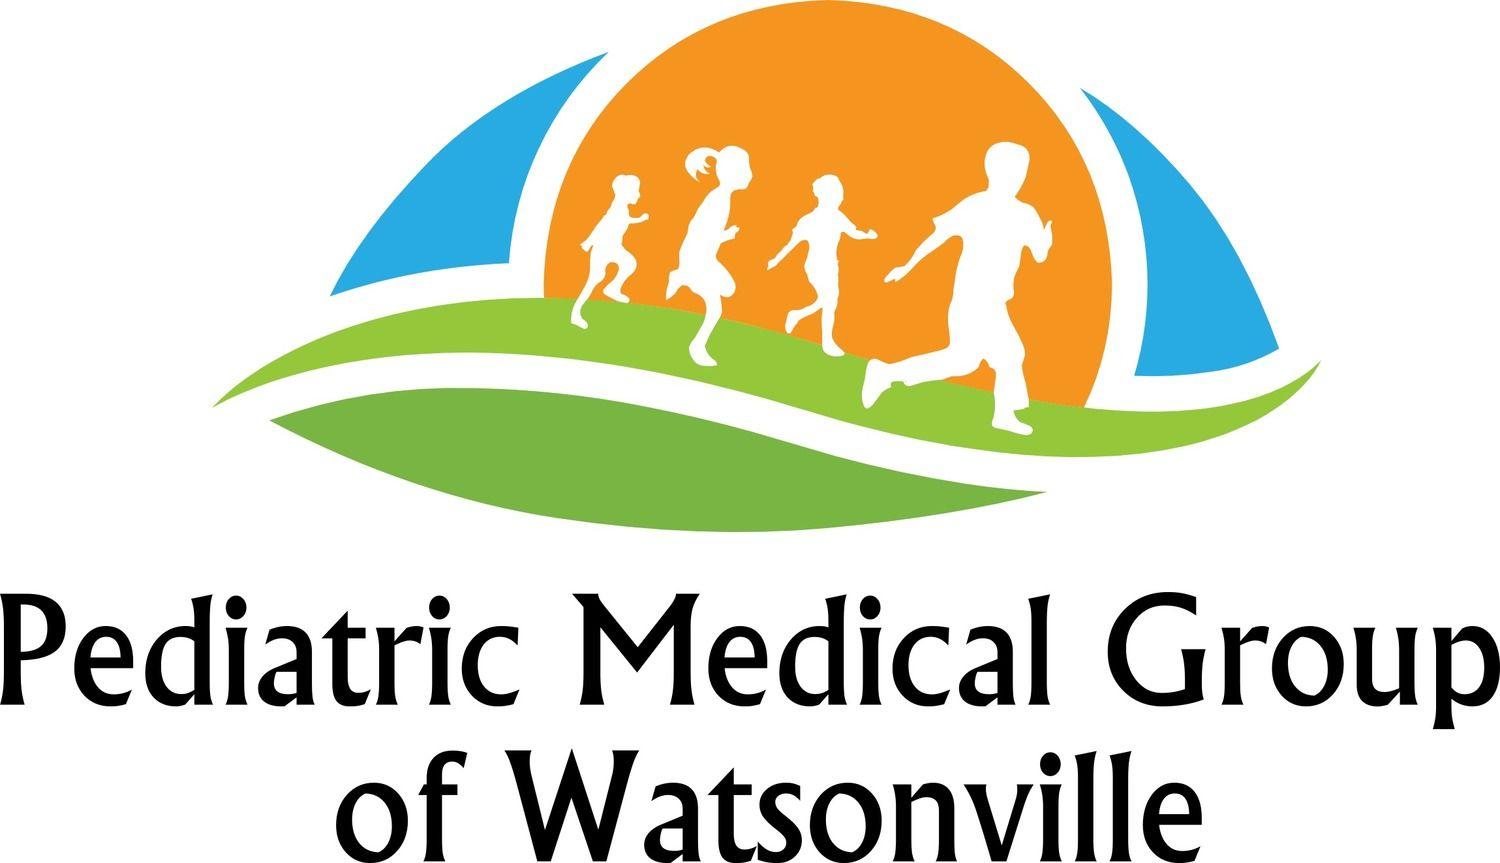 Watsonville Logo - Pediatric Medical Group of Watsonville